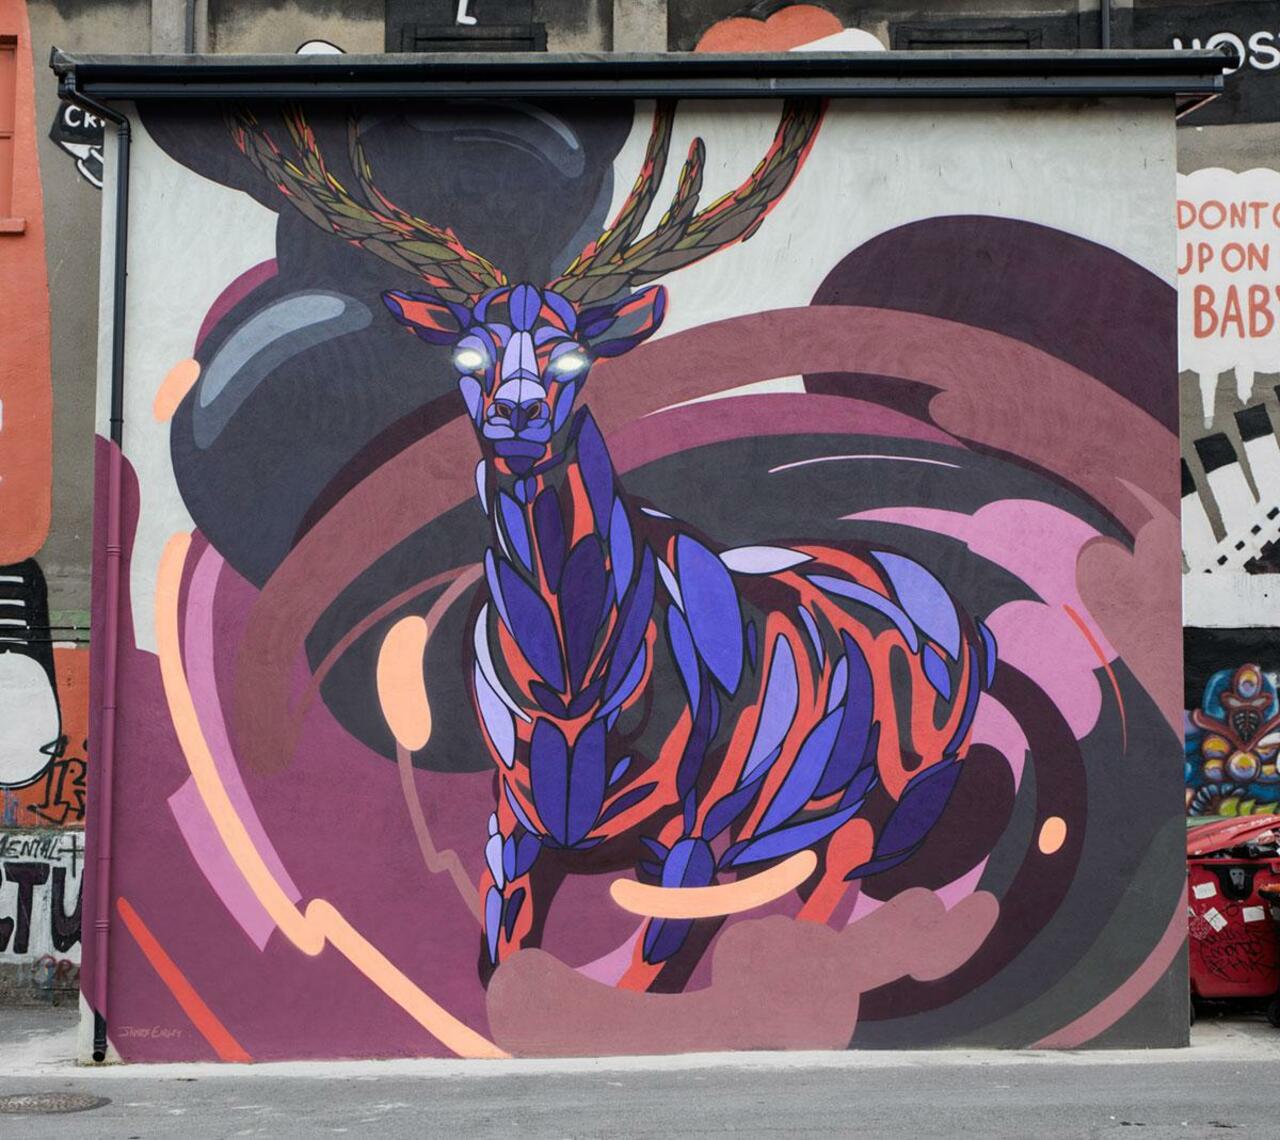 James Earley unveils a series of new pieces in Dublin, Ireland. #StreetArt #Graffiti #Mural http://t.co/6qhKOEwcQW